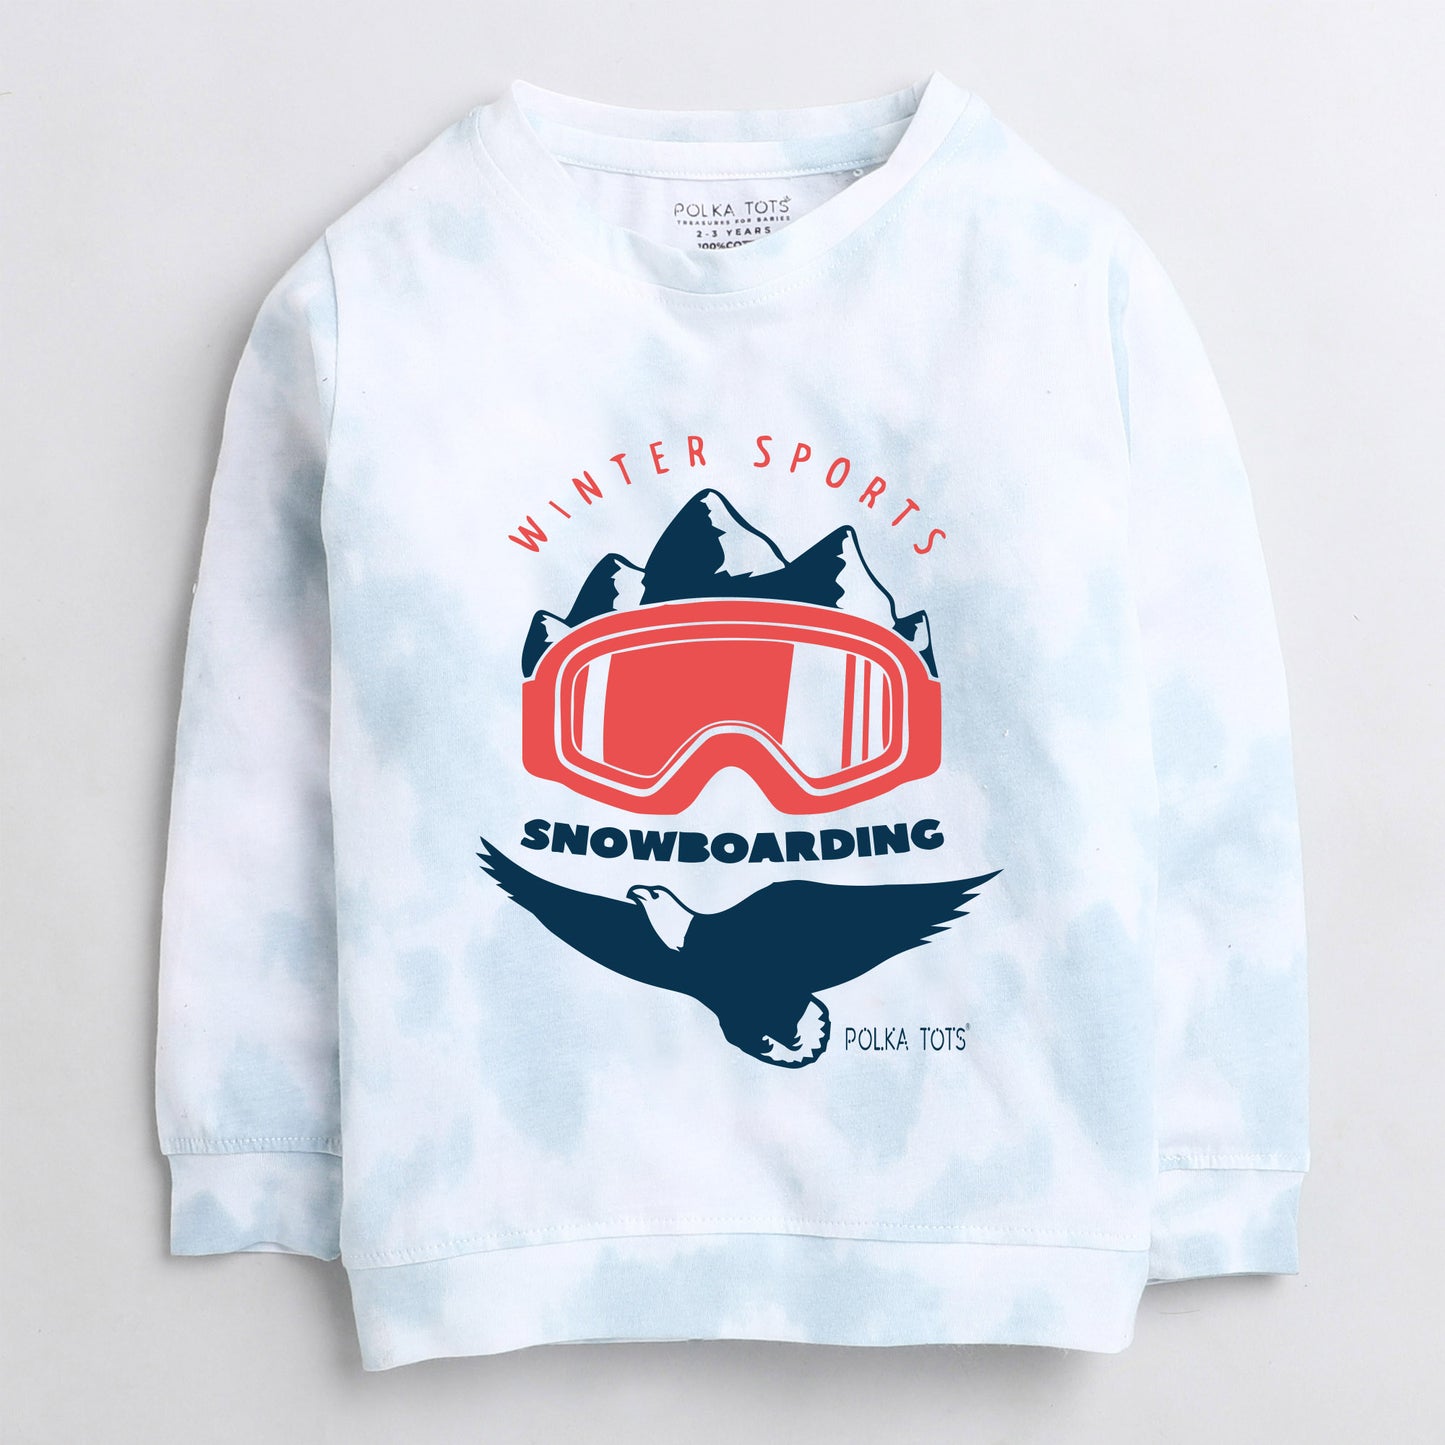 Polka Tots Snowboarding Full sleeve tshirt with lounge pant set - Light blue